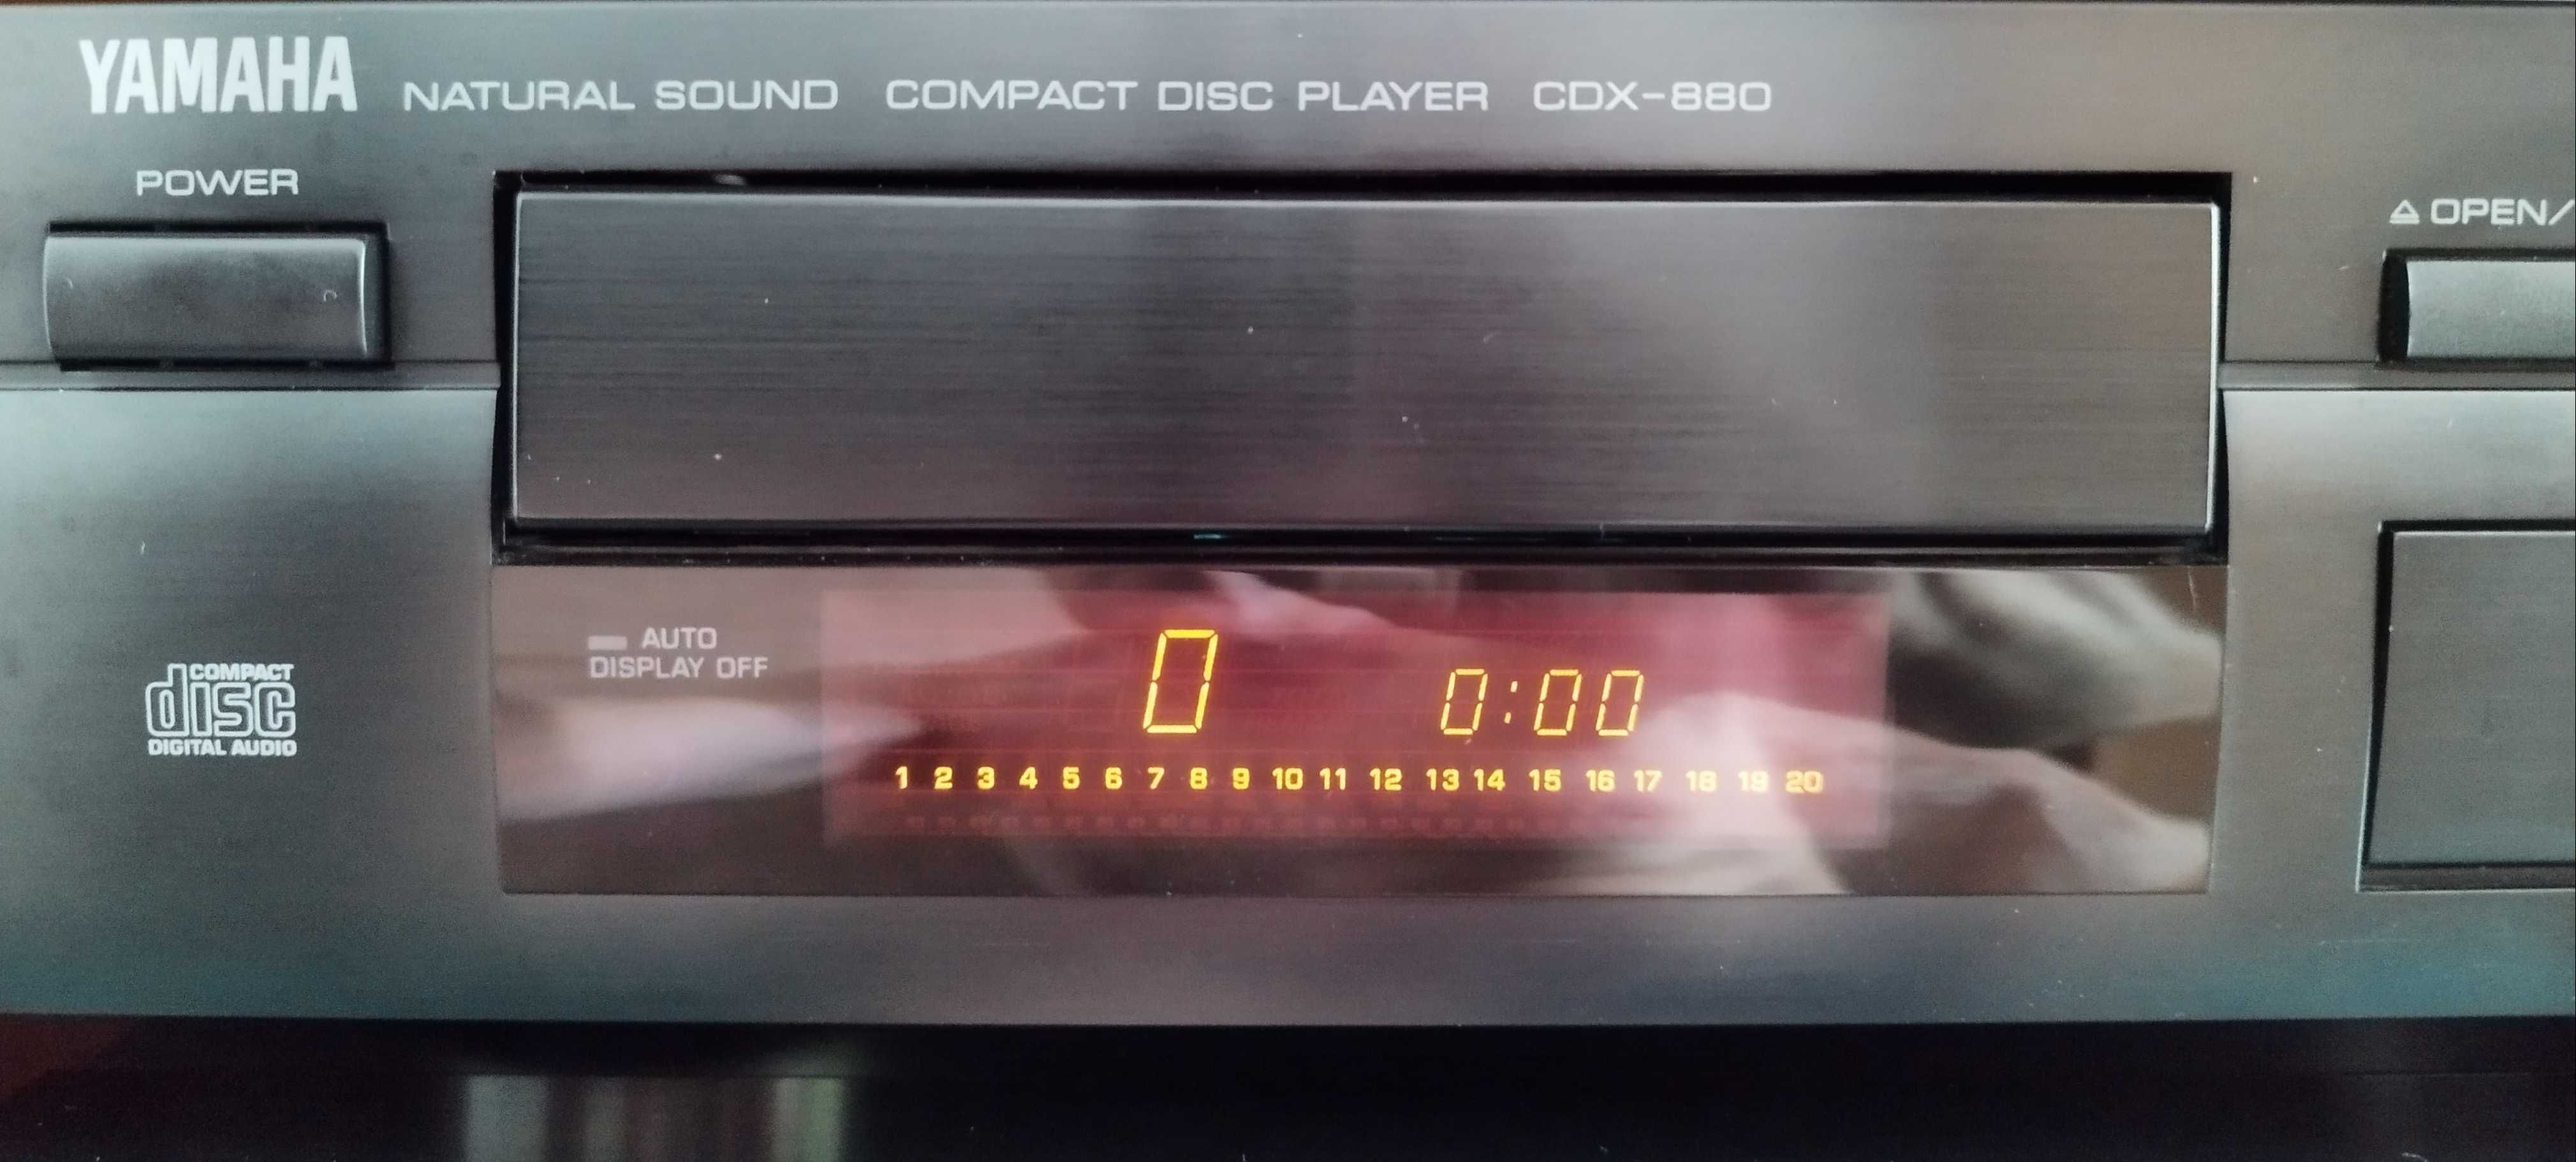 Yamaha CDX-880 cd player